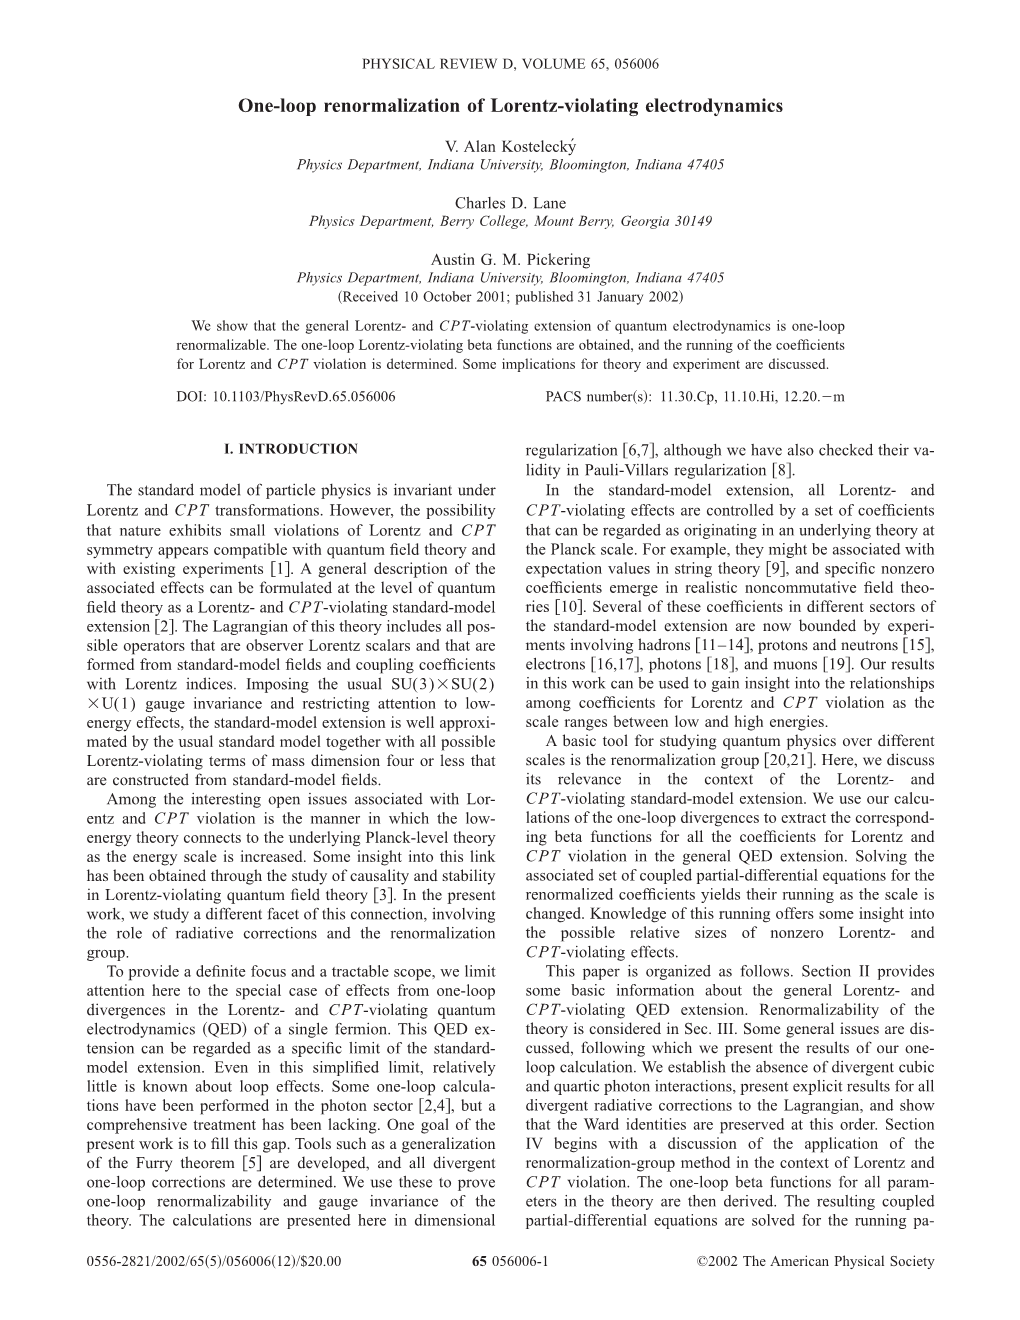 One-Loop Renormalization of Lorentz-Violating Electrodynamics